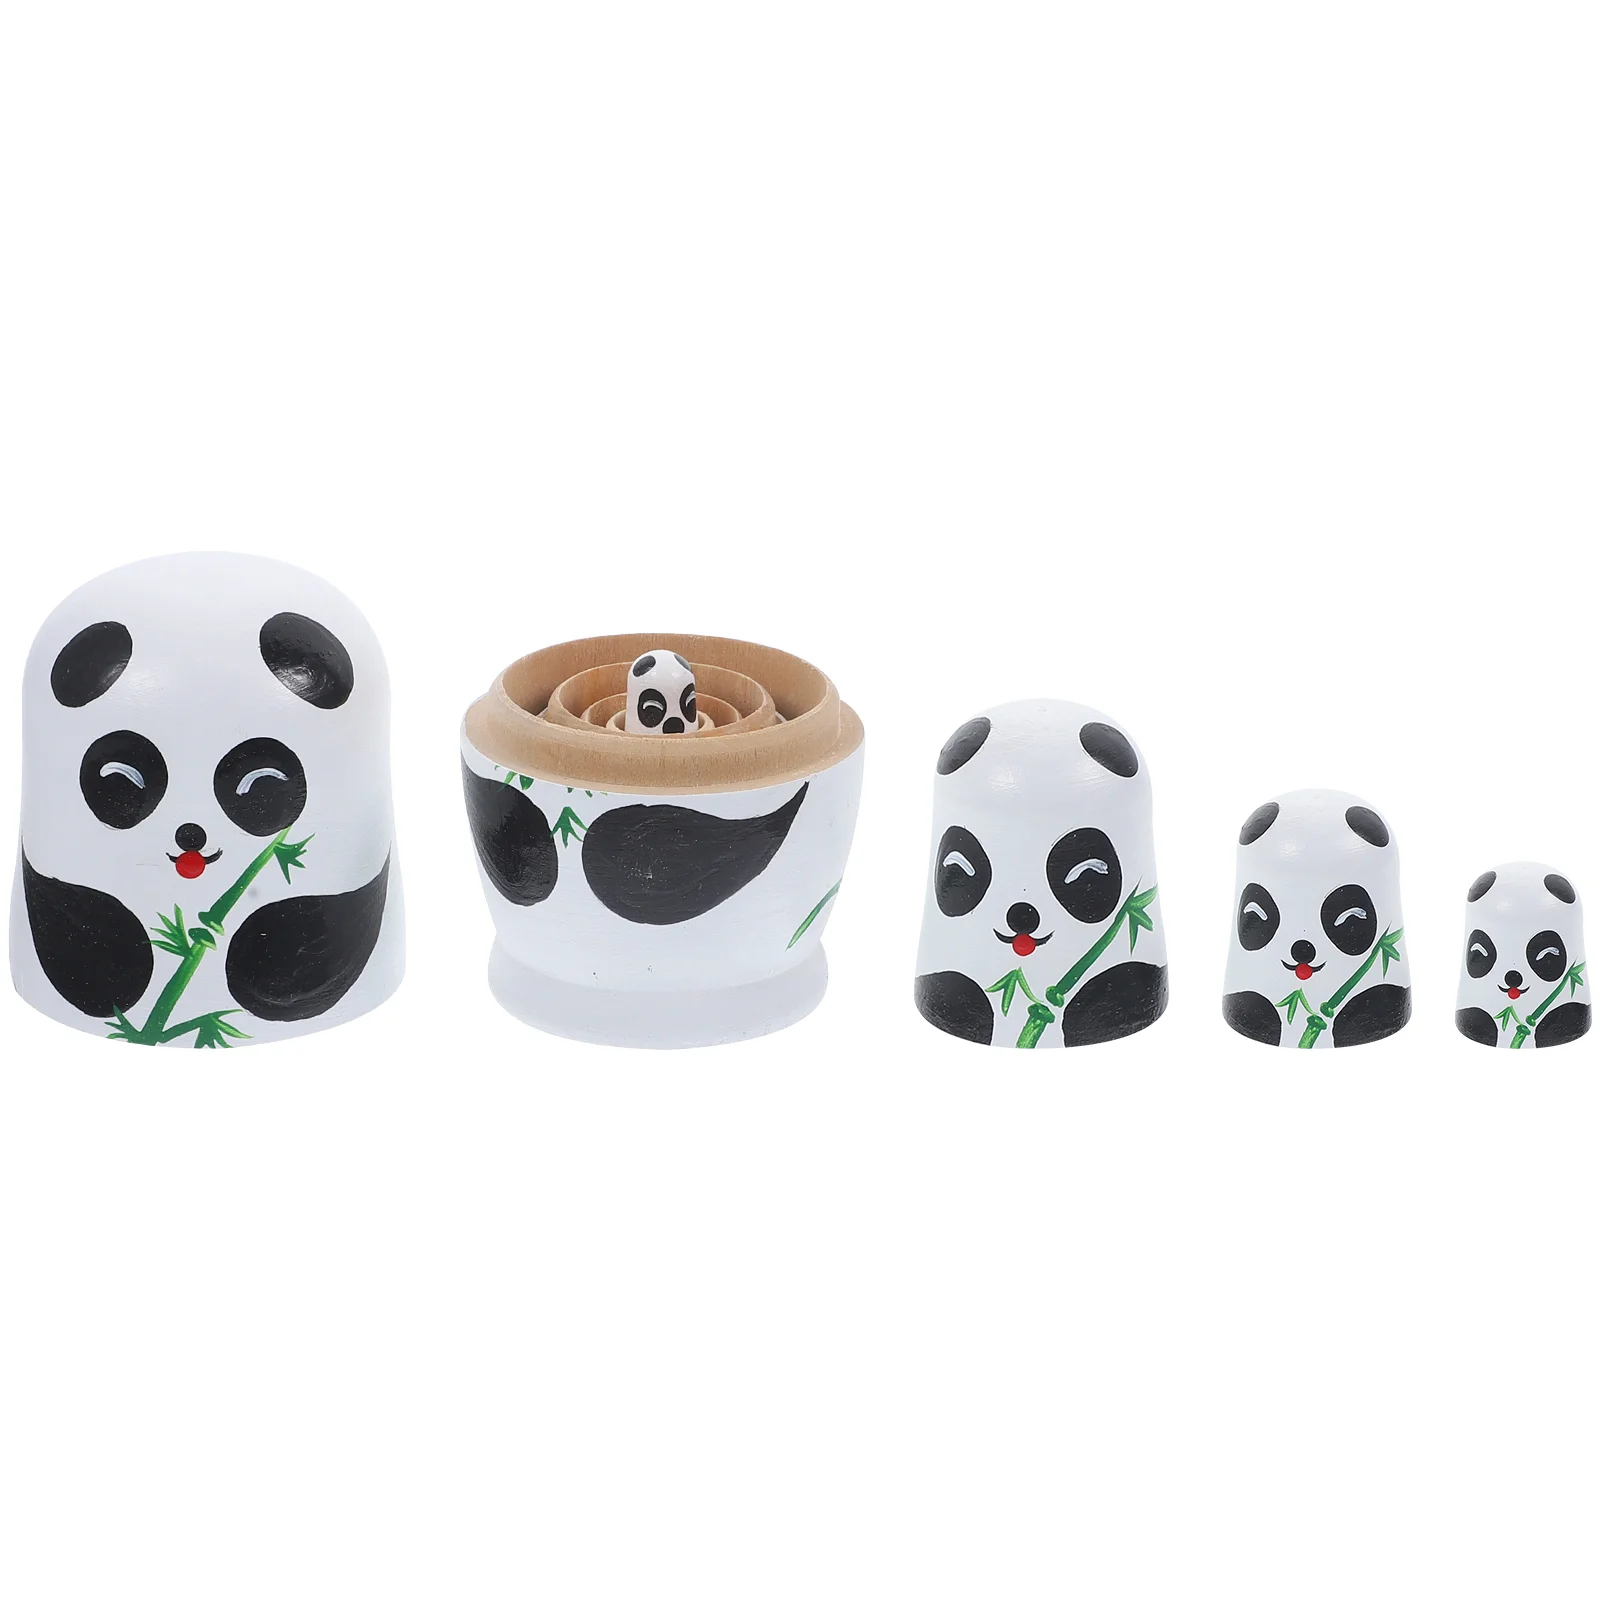 

Russian Handmade Wooden Panda Nesting Dolls Matryoshka Toy Children Gift Desktop Accessory